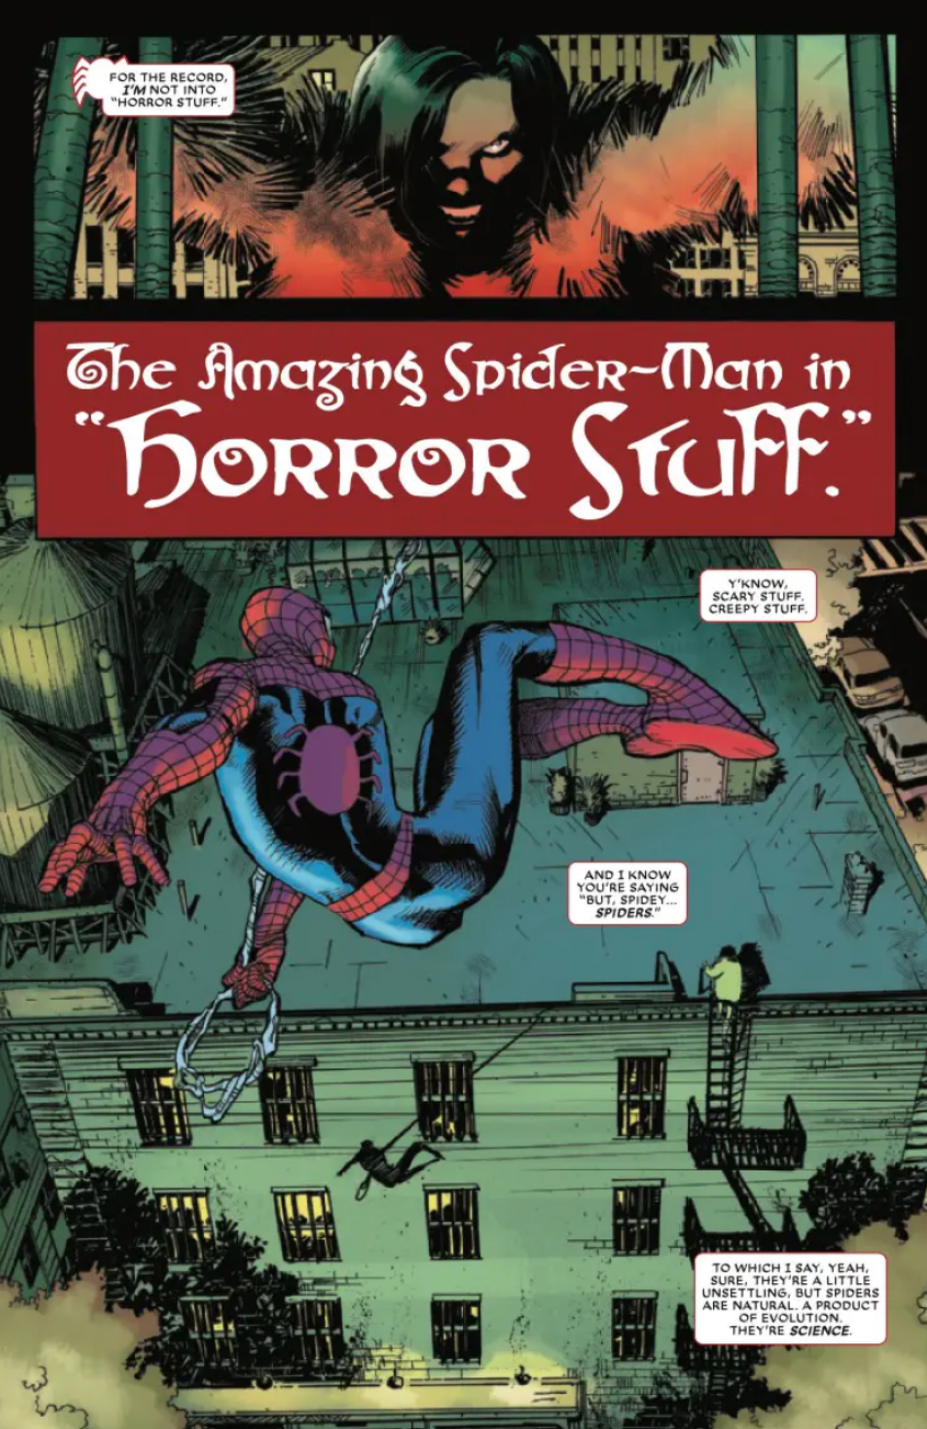 Marvel's Spider-Man: Unforgiven #1 Preview